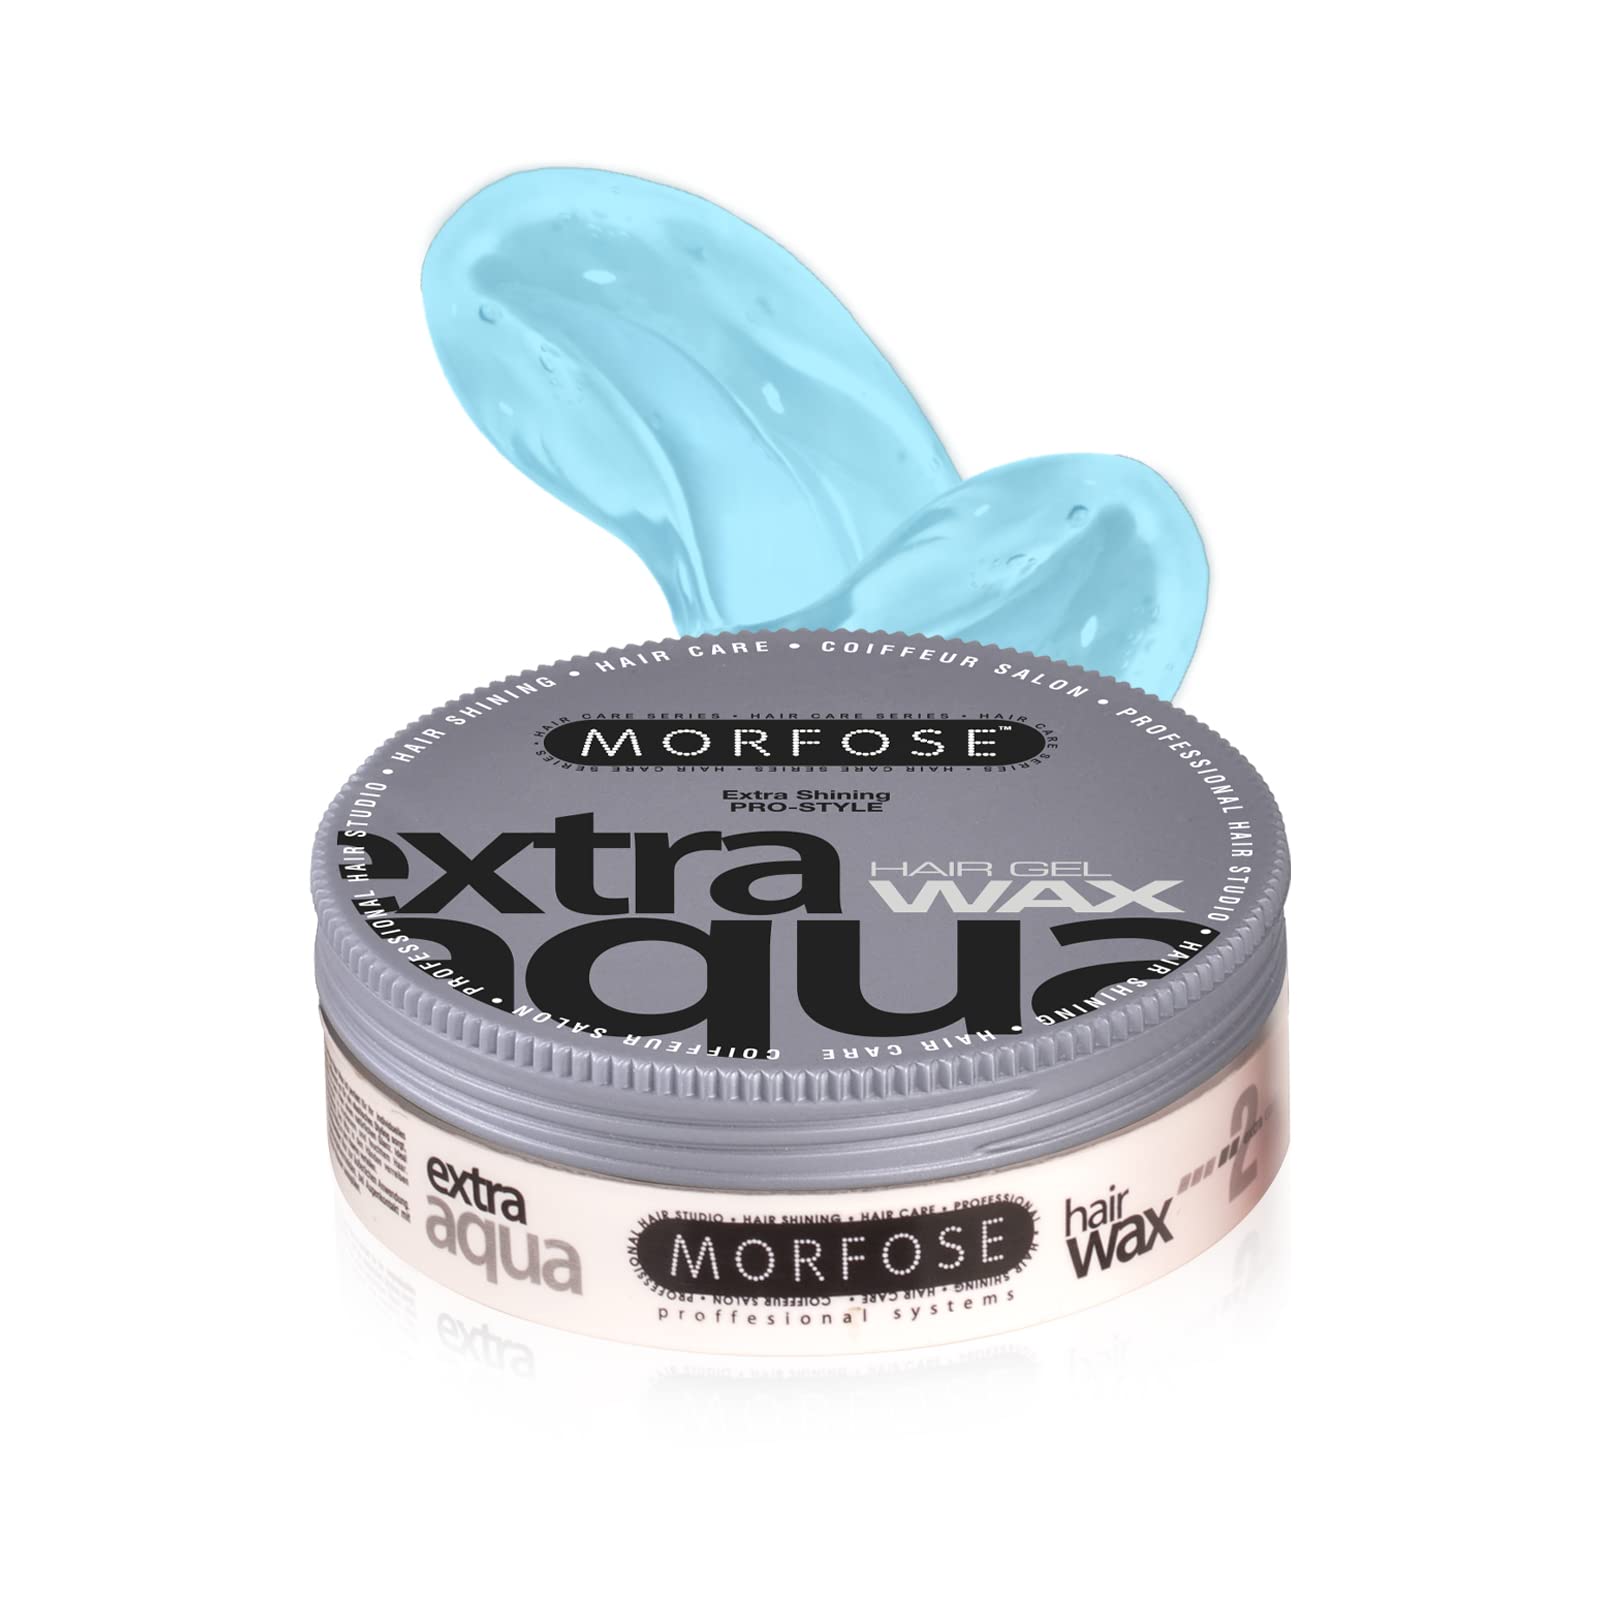 Morfose Professional Ultra Aqua Hair Wax with Extra Shining